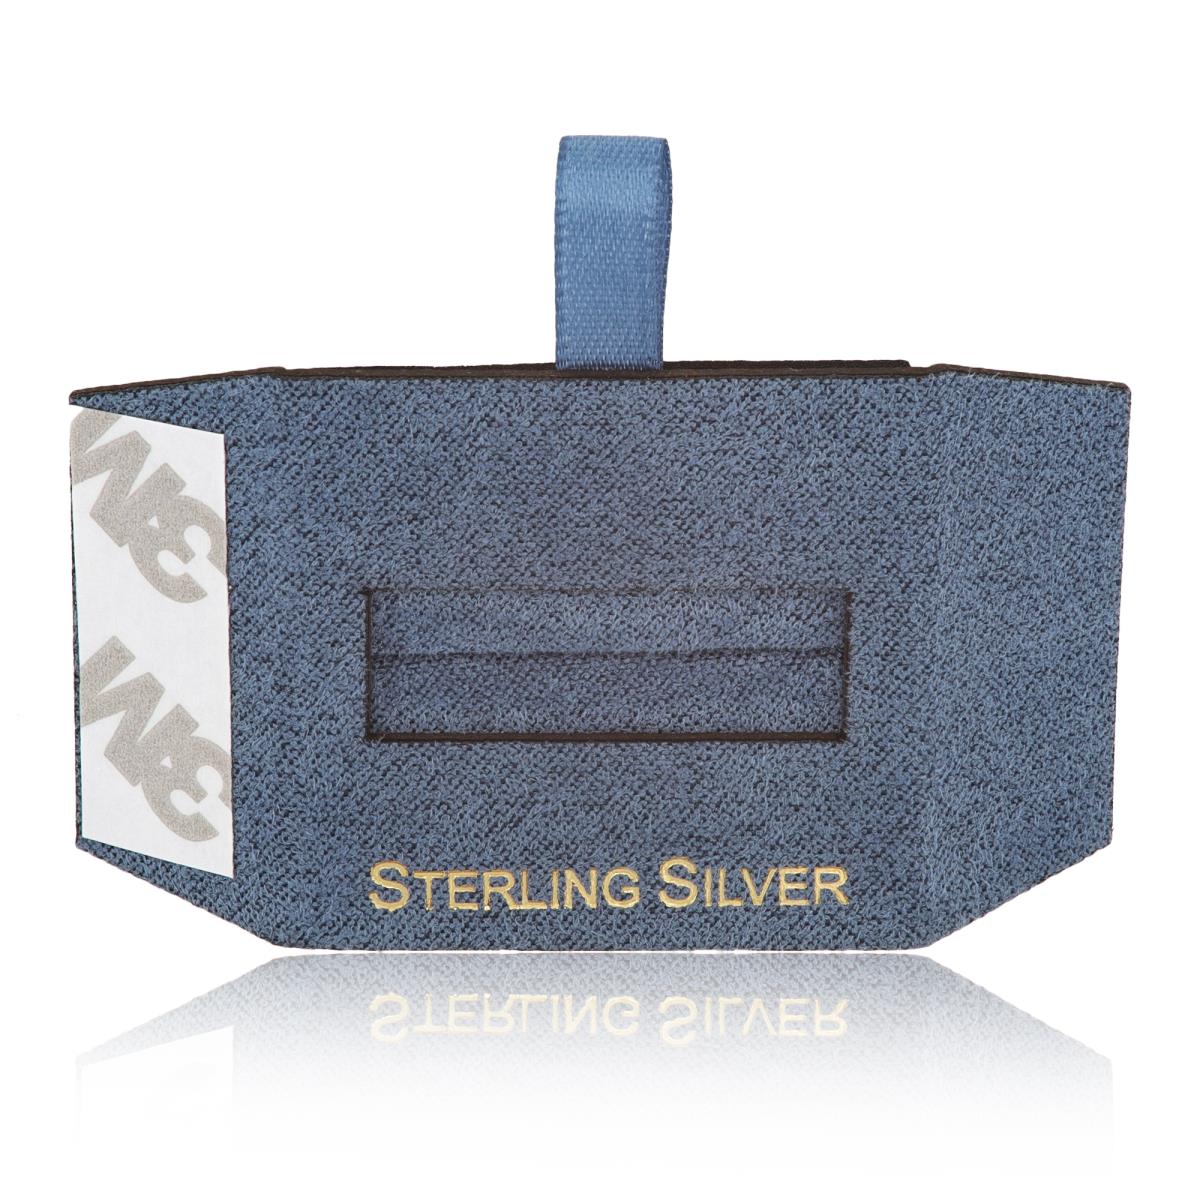 Gray Sterling Silver, Gold Foil Ring Insert (Box B06-159/Gray/D)